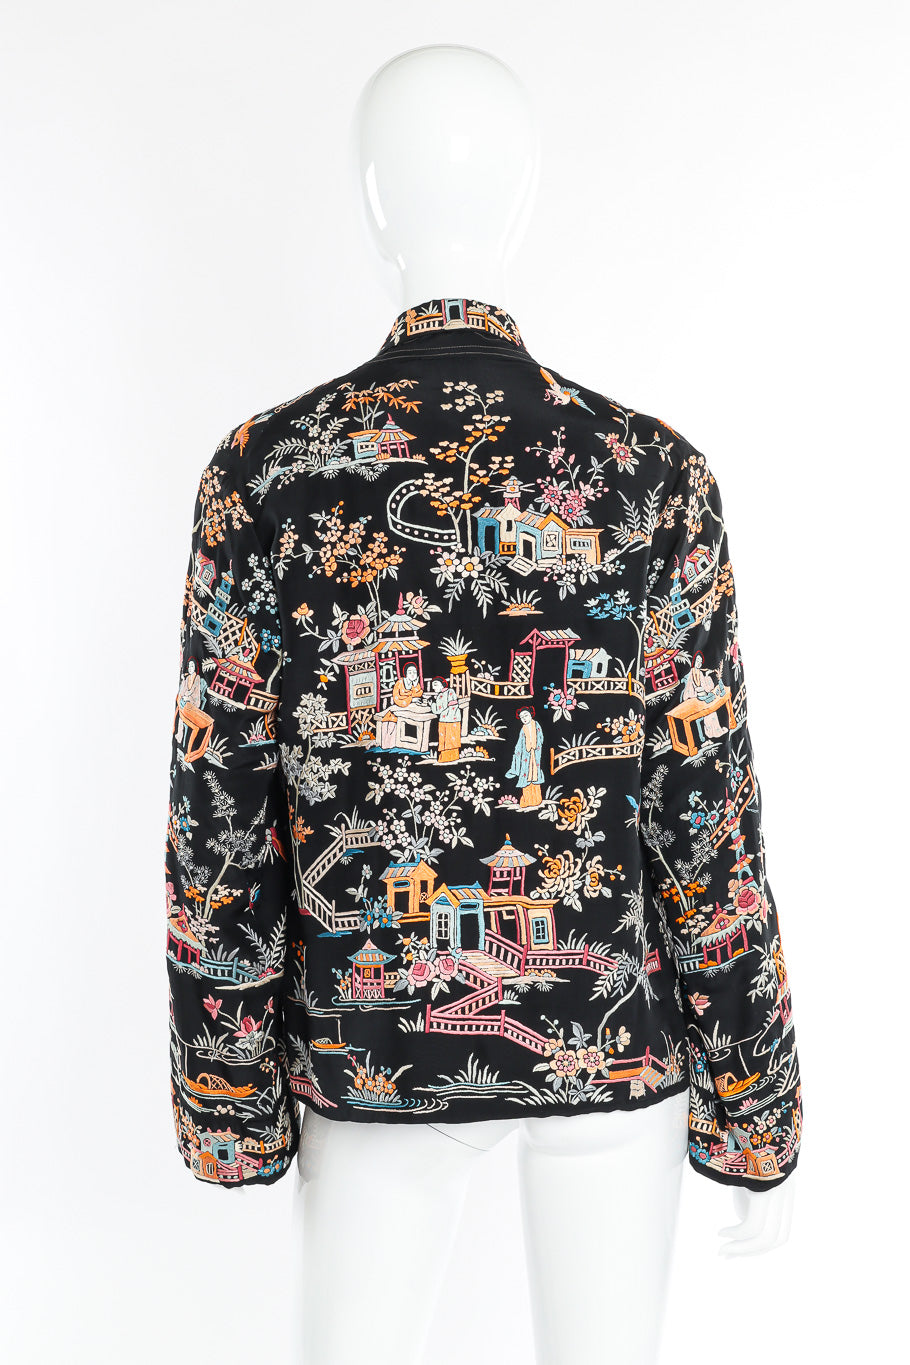 Embroidered silk multi-color jacket on mannequin @recessla